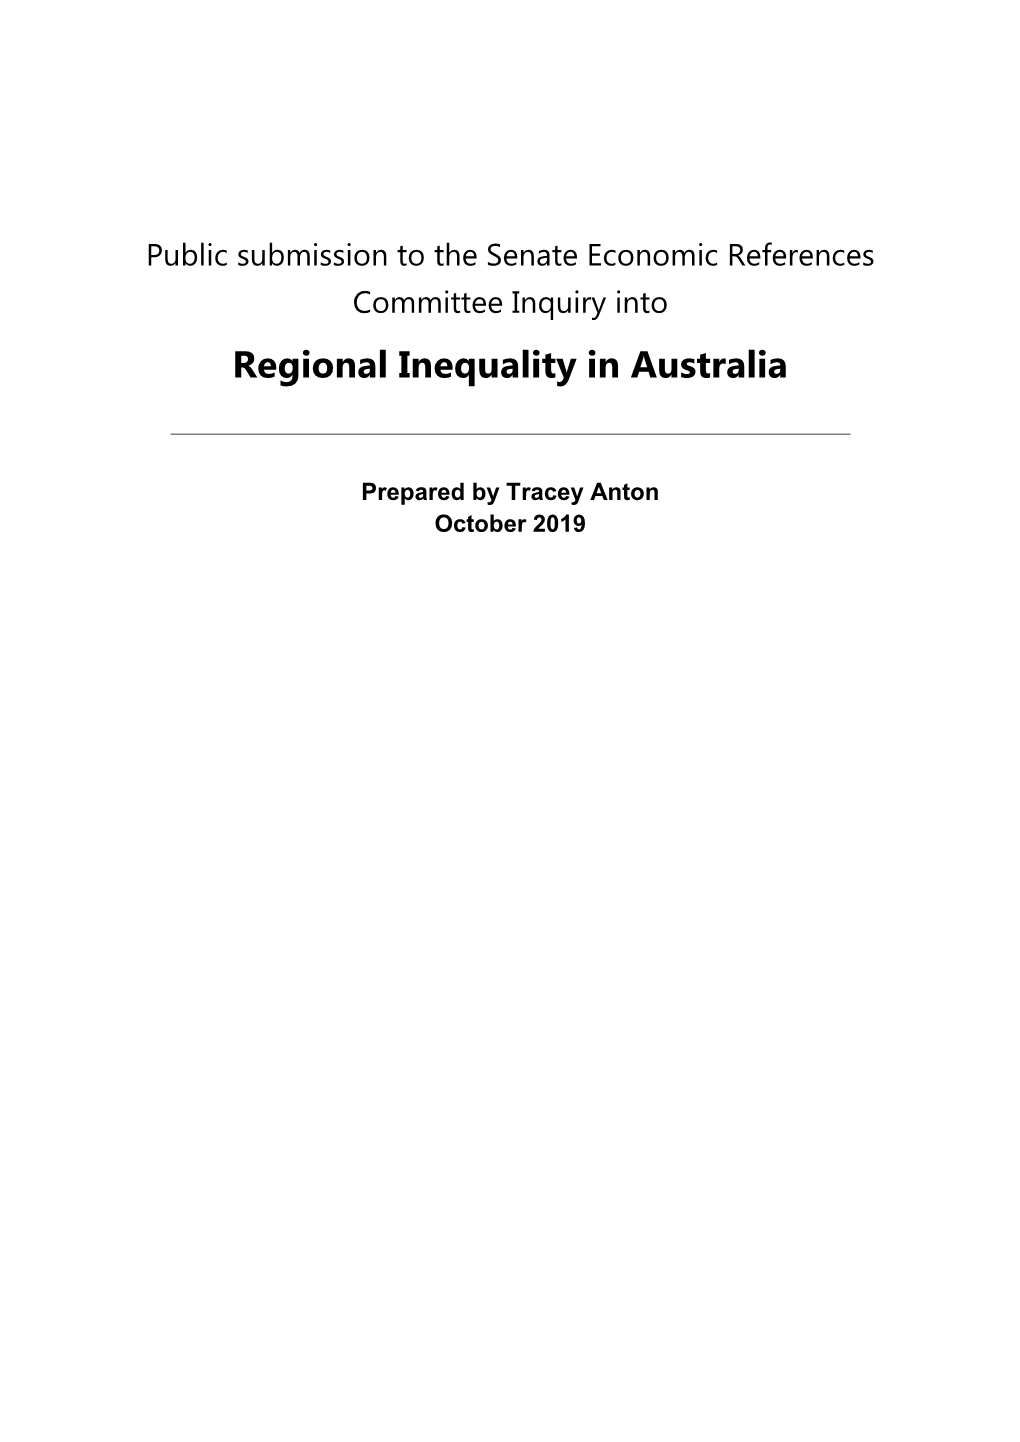 Regional Inequality in Australia